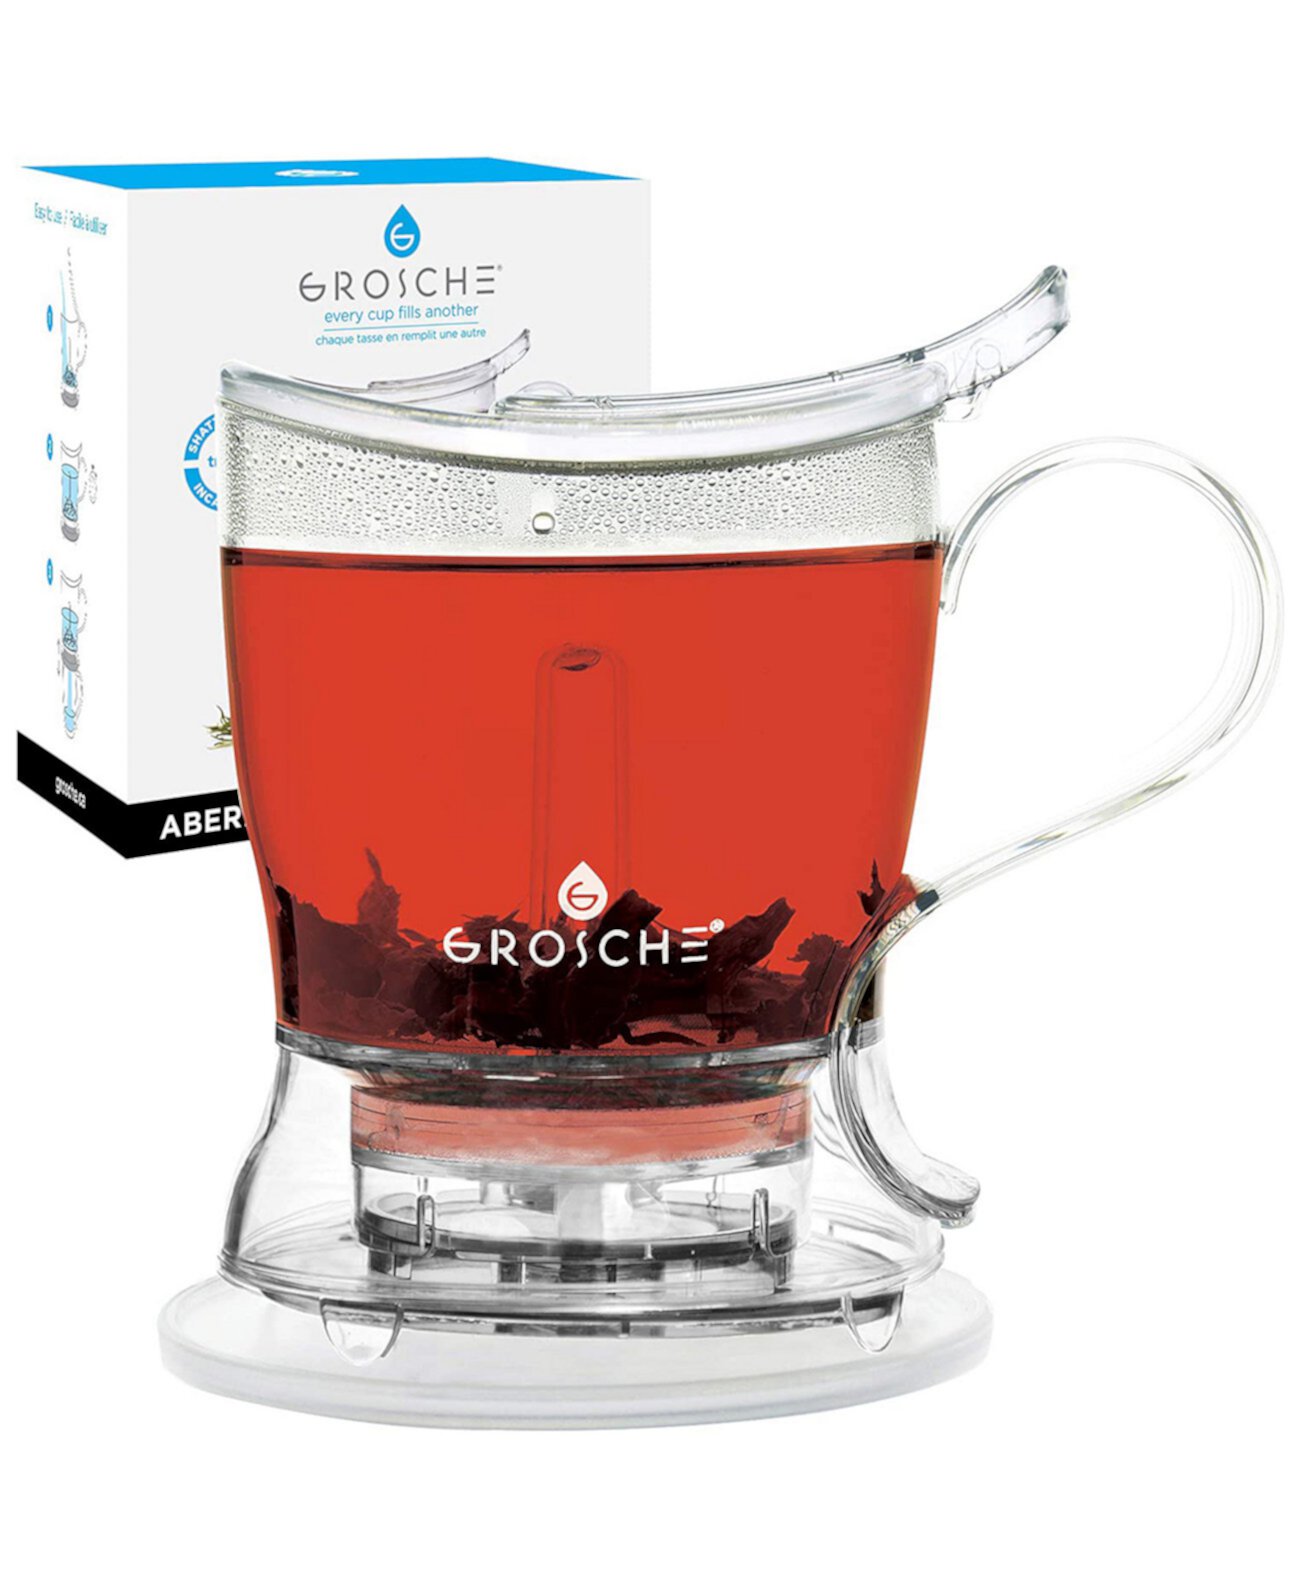 Aberdeen Smart Tea Maker and Tea Steeper, чайник с нижней дозировкой 17,7 жидких унций Grosche